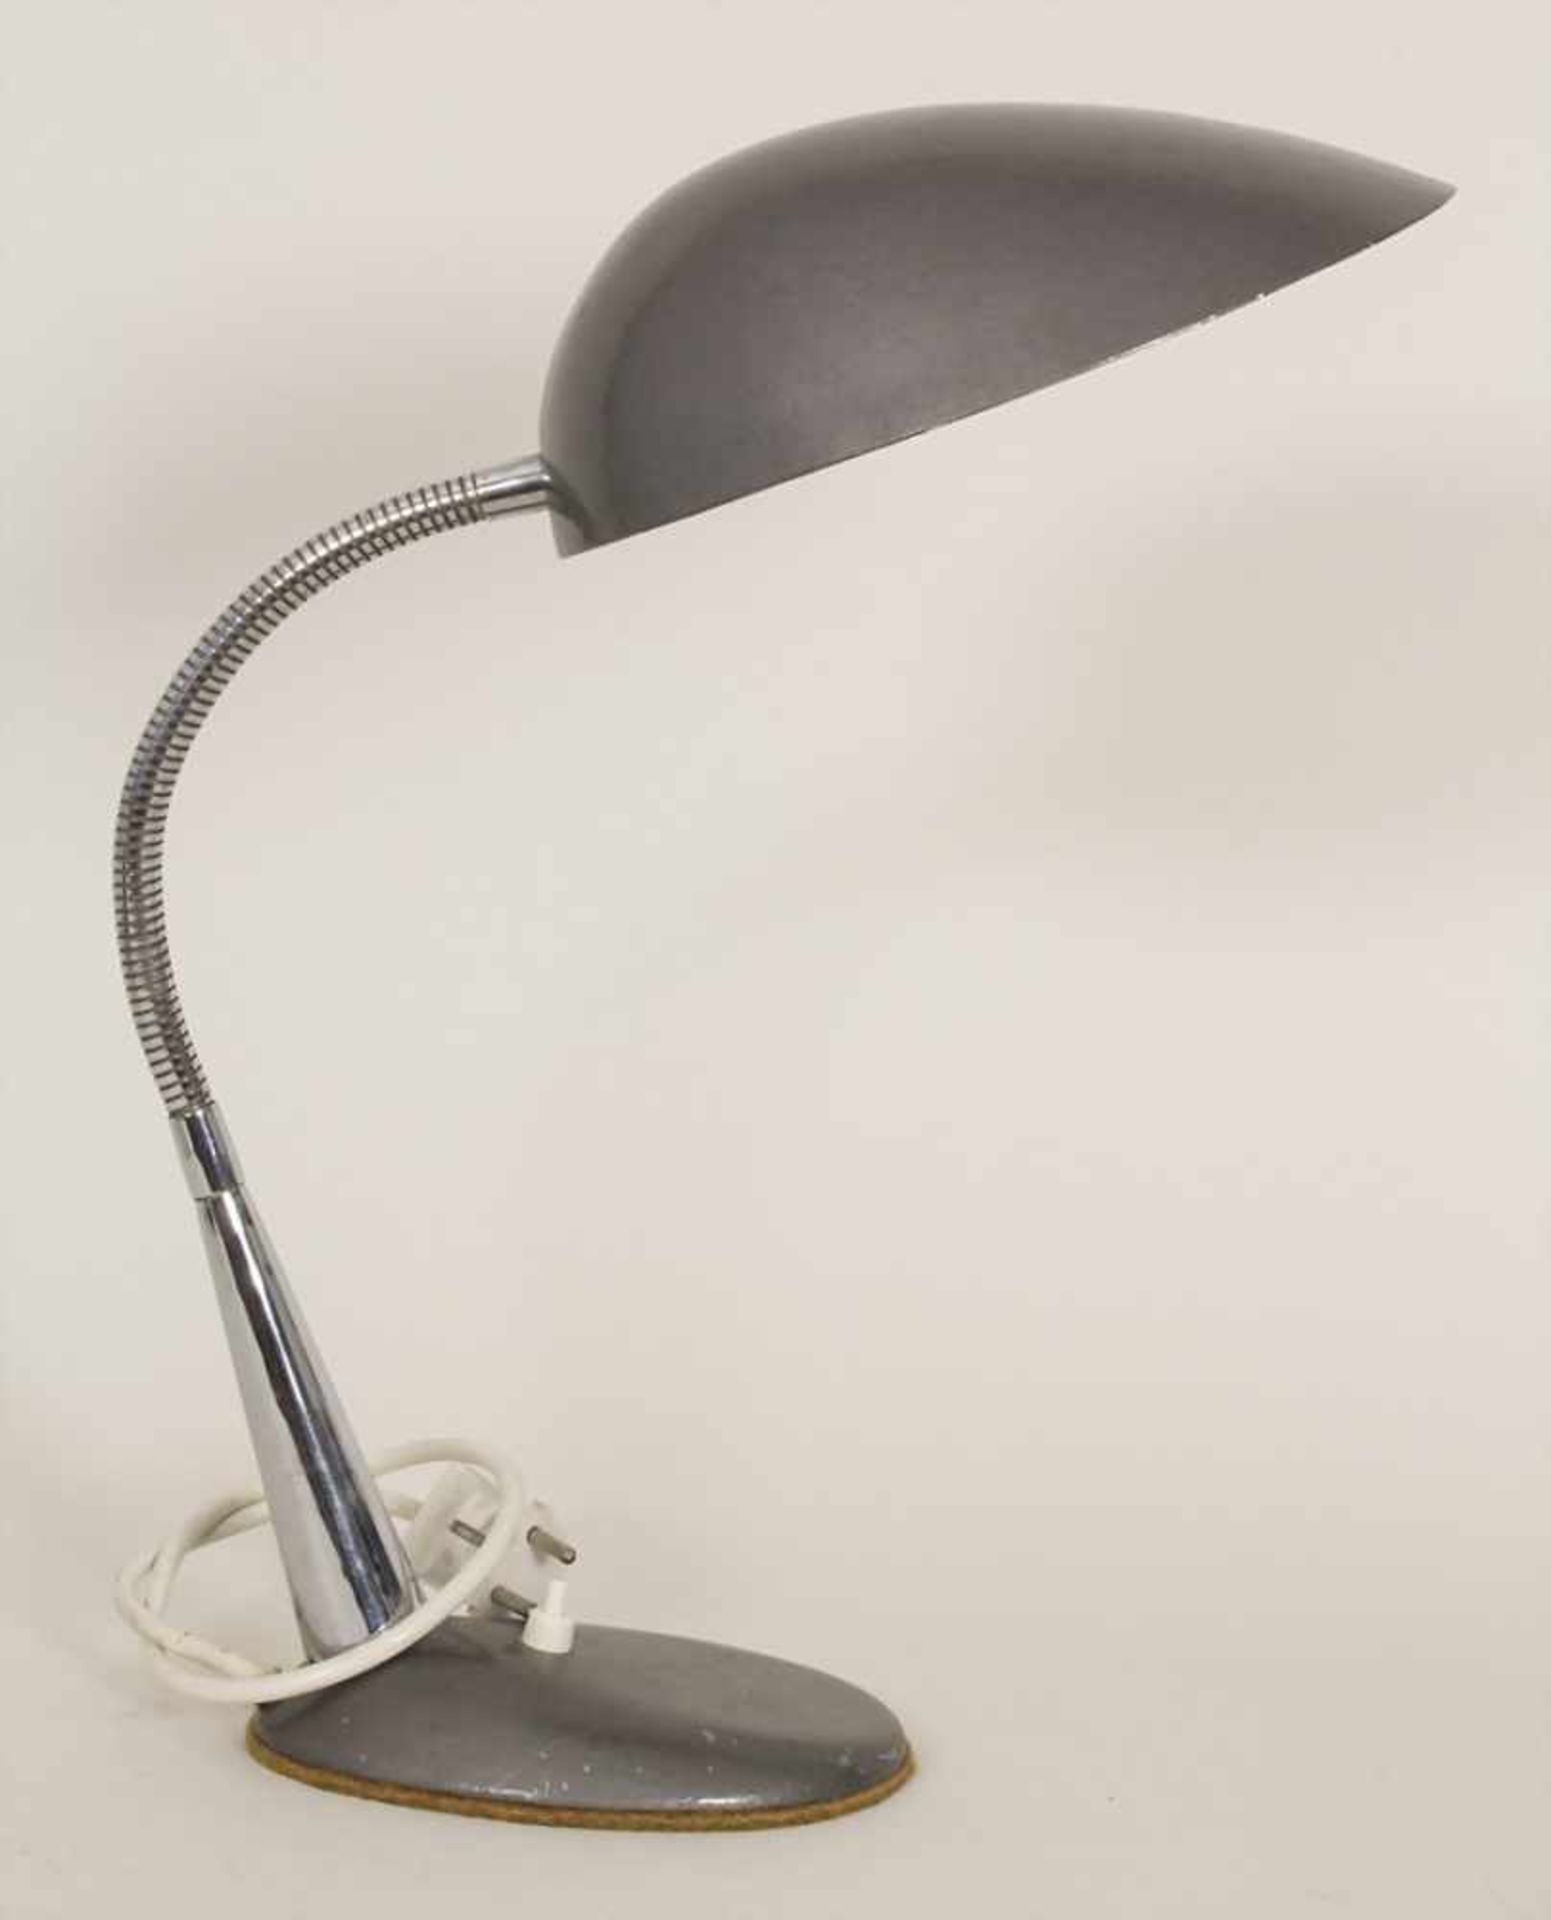 Schreibtischlampe / A desk lamp, um 1950Material: Schirm in Aluminium mit dunkelgrauem